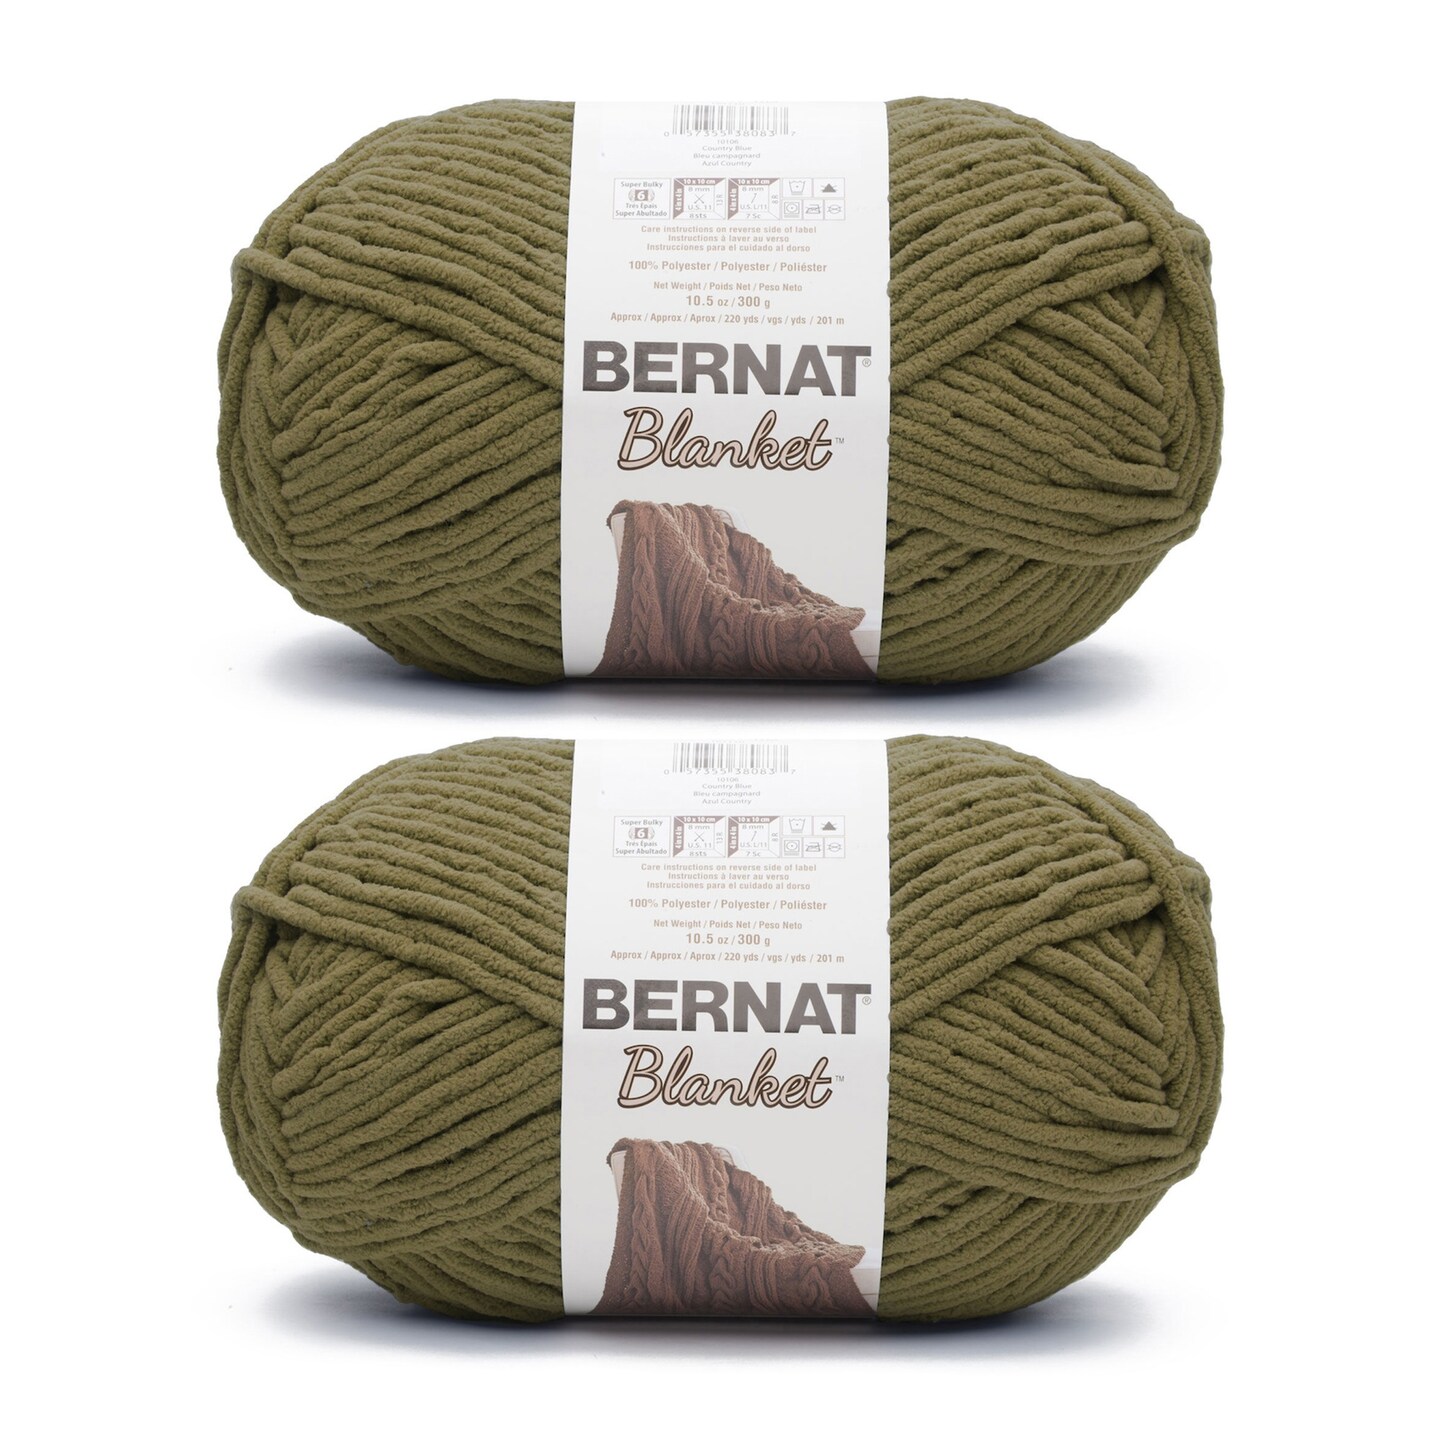  Bernat Blanket Yarn - Big Ball (10.5 oz) - 2 Pack with